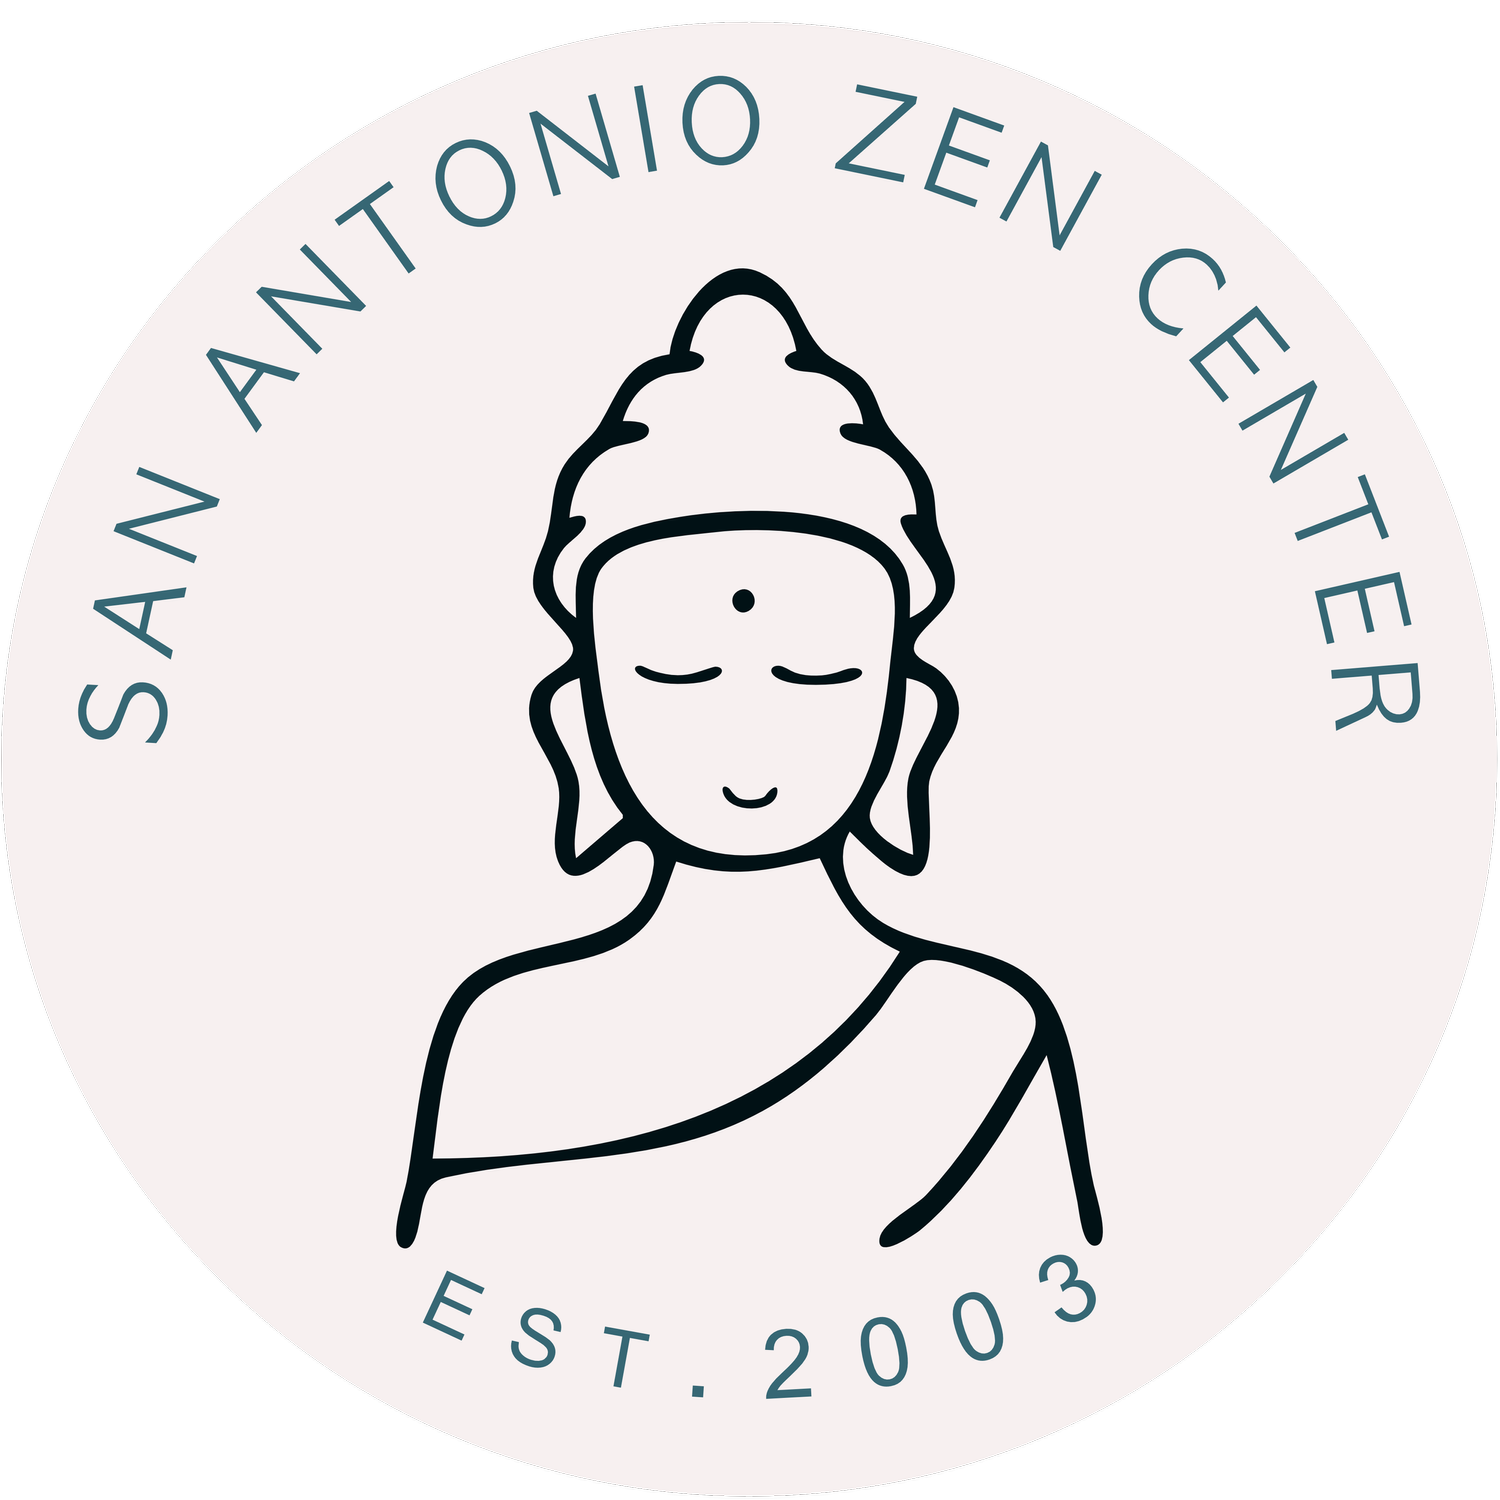 San Antonio Zen Center